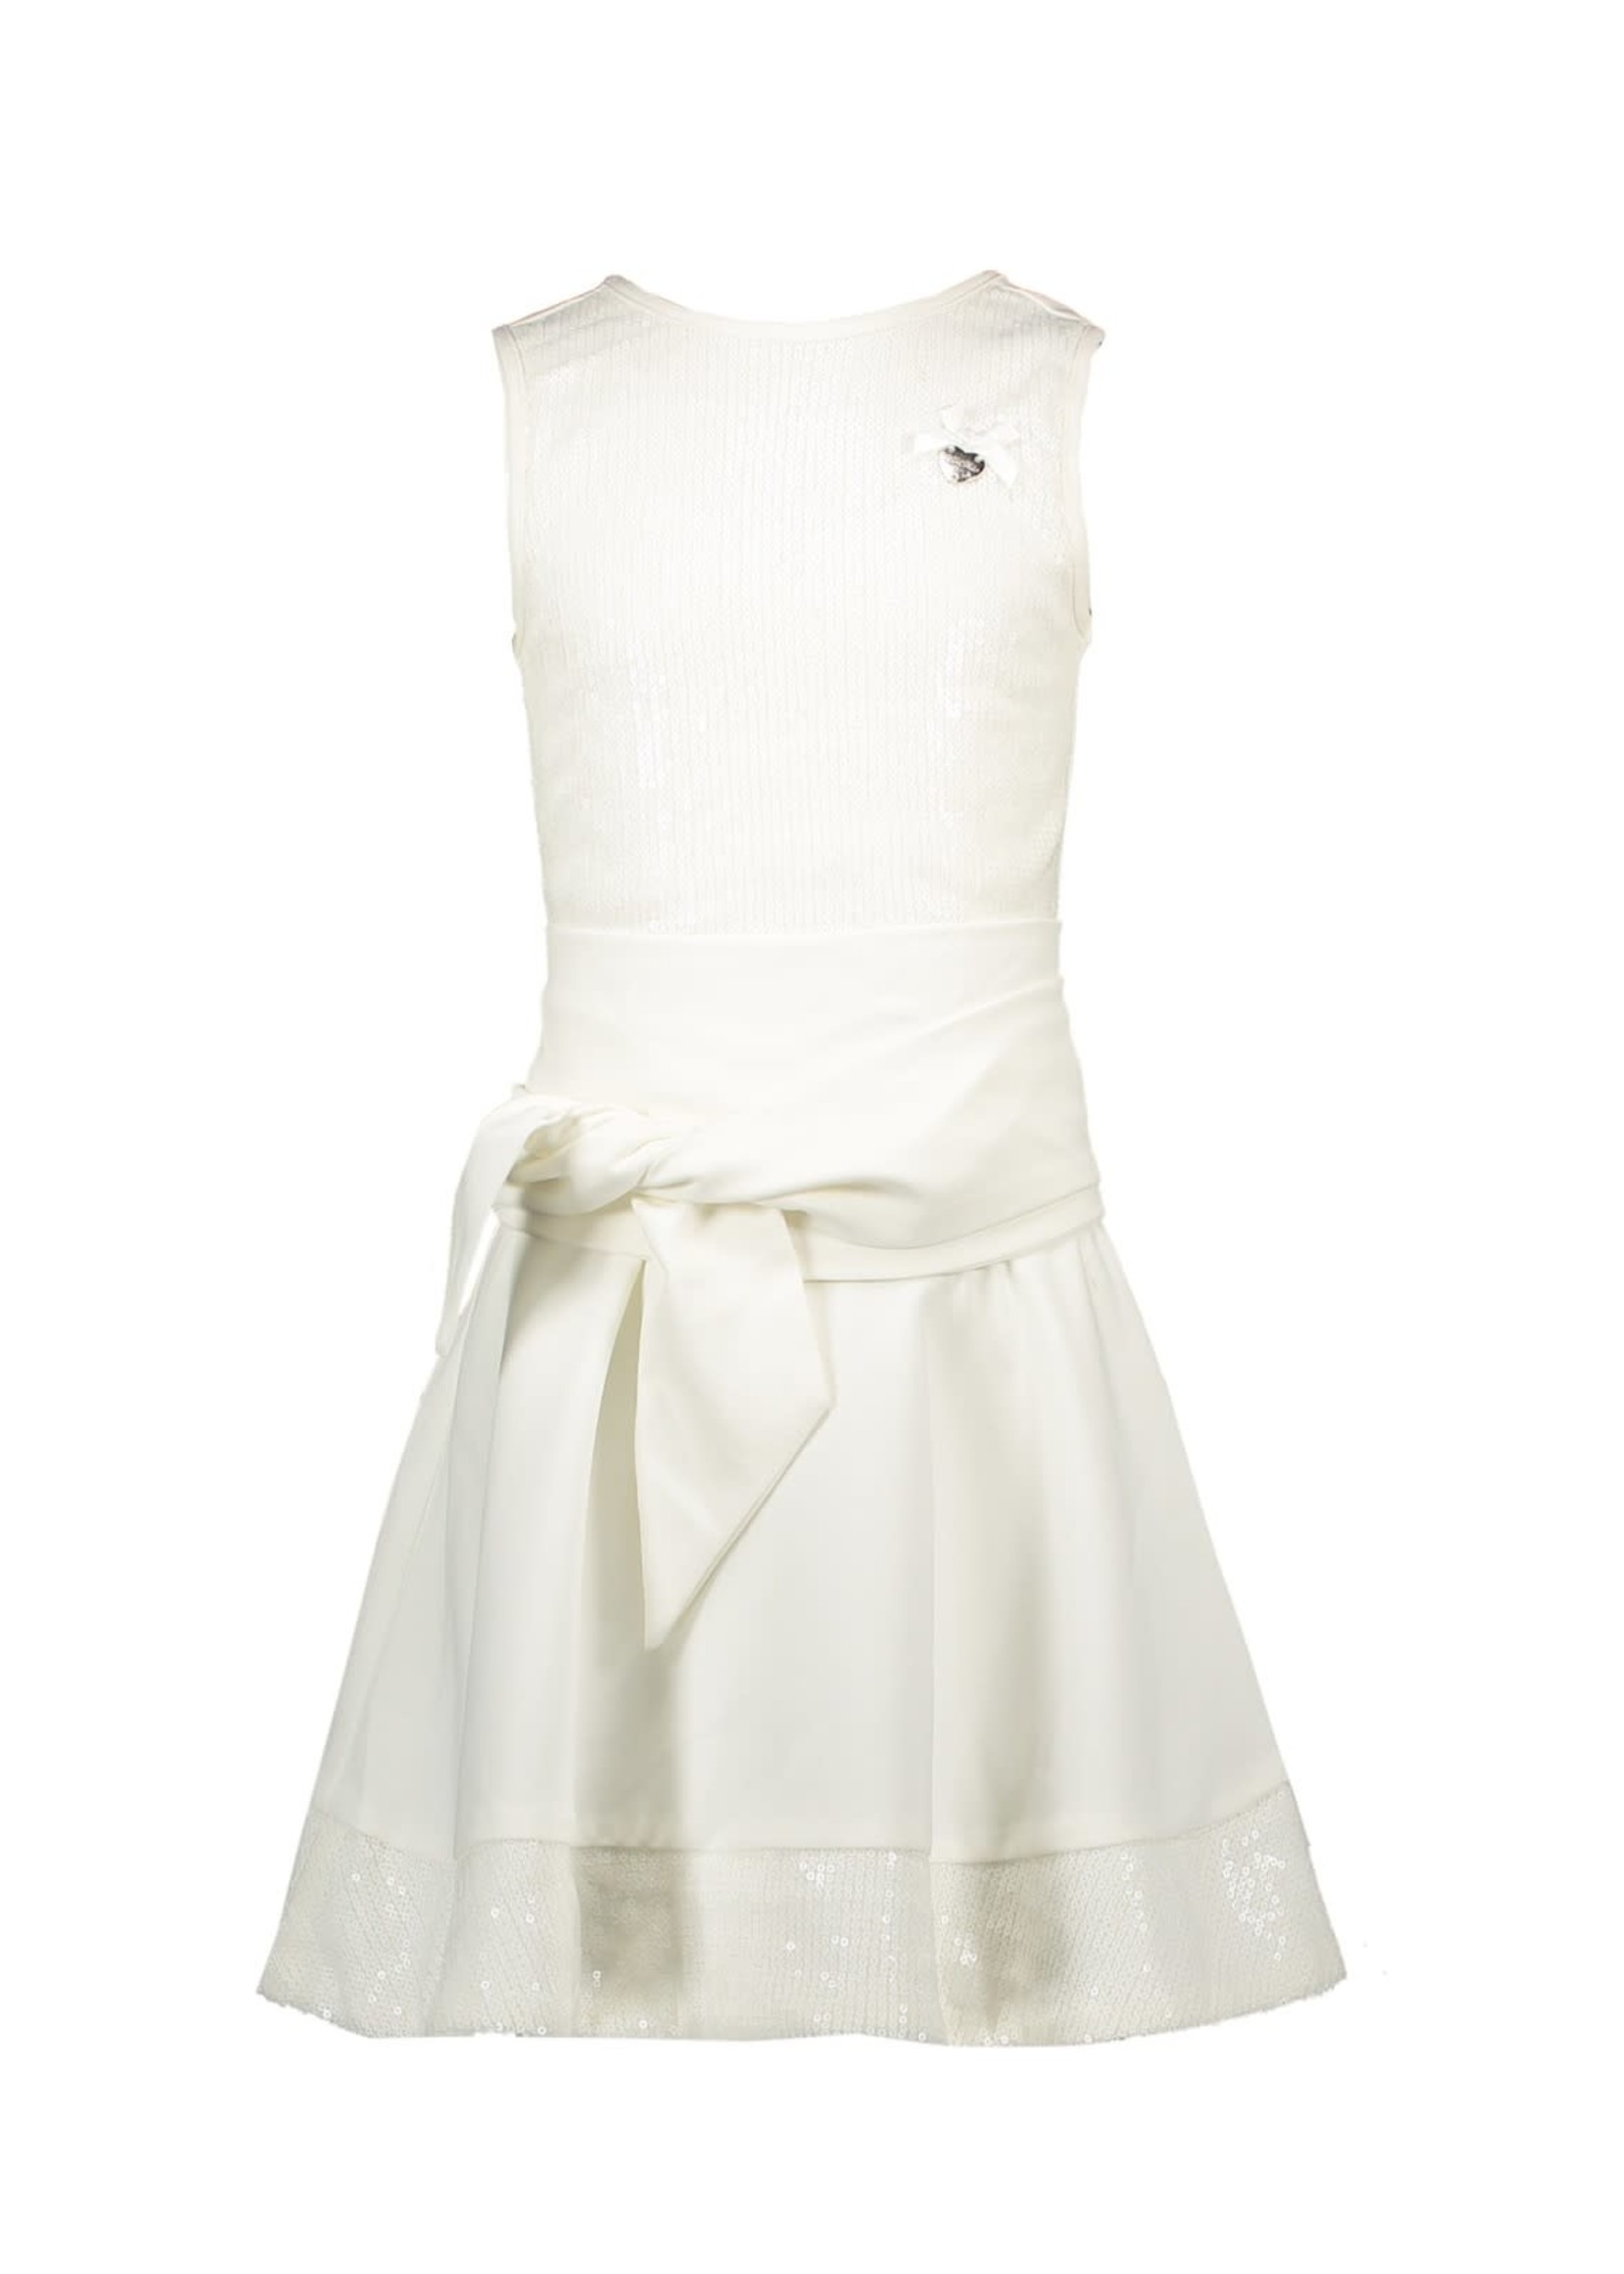 Le Chic Le Chic dress sequin top & fabric belt C012-5806 Off White